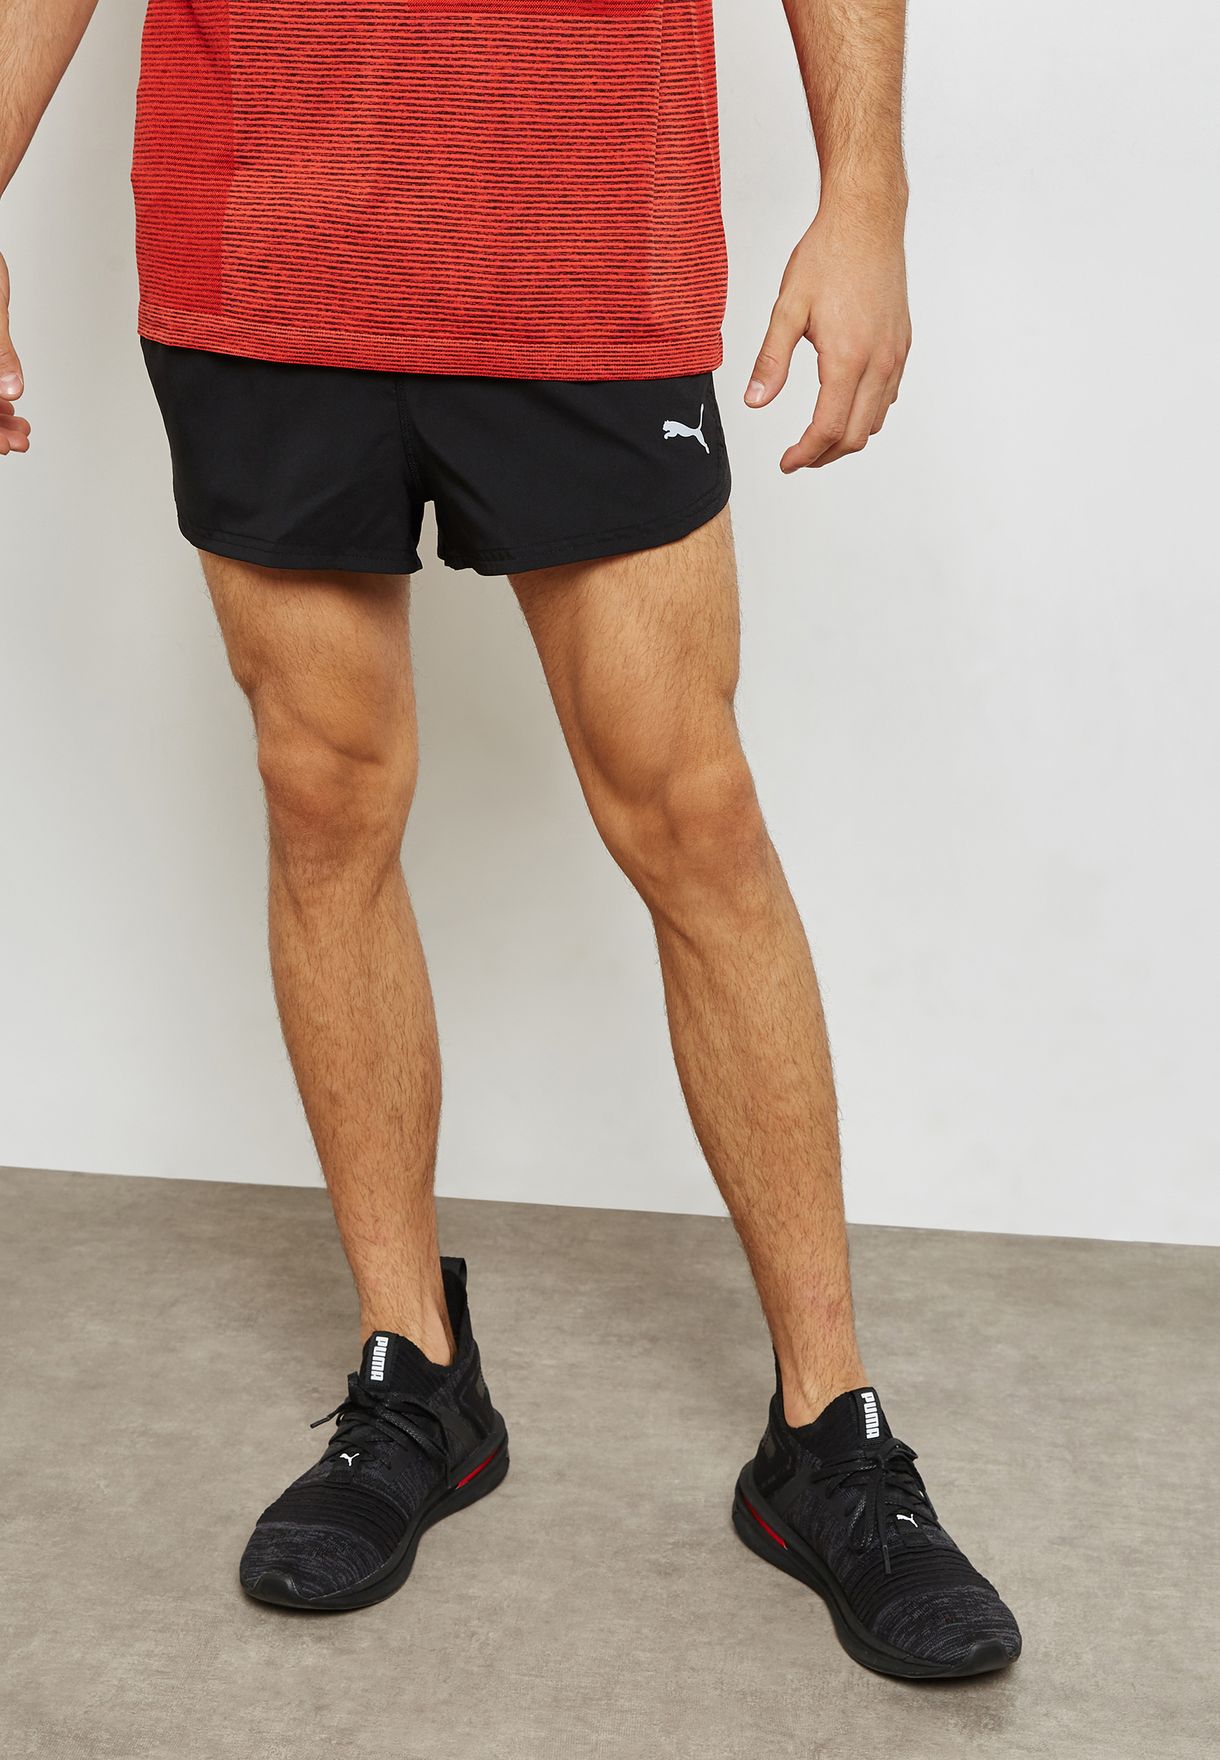 puma core run shorts